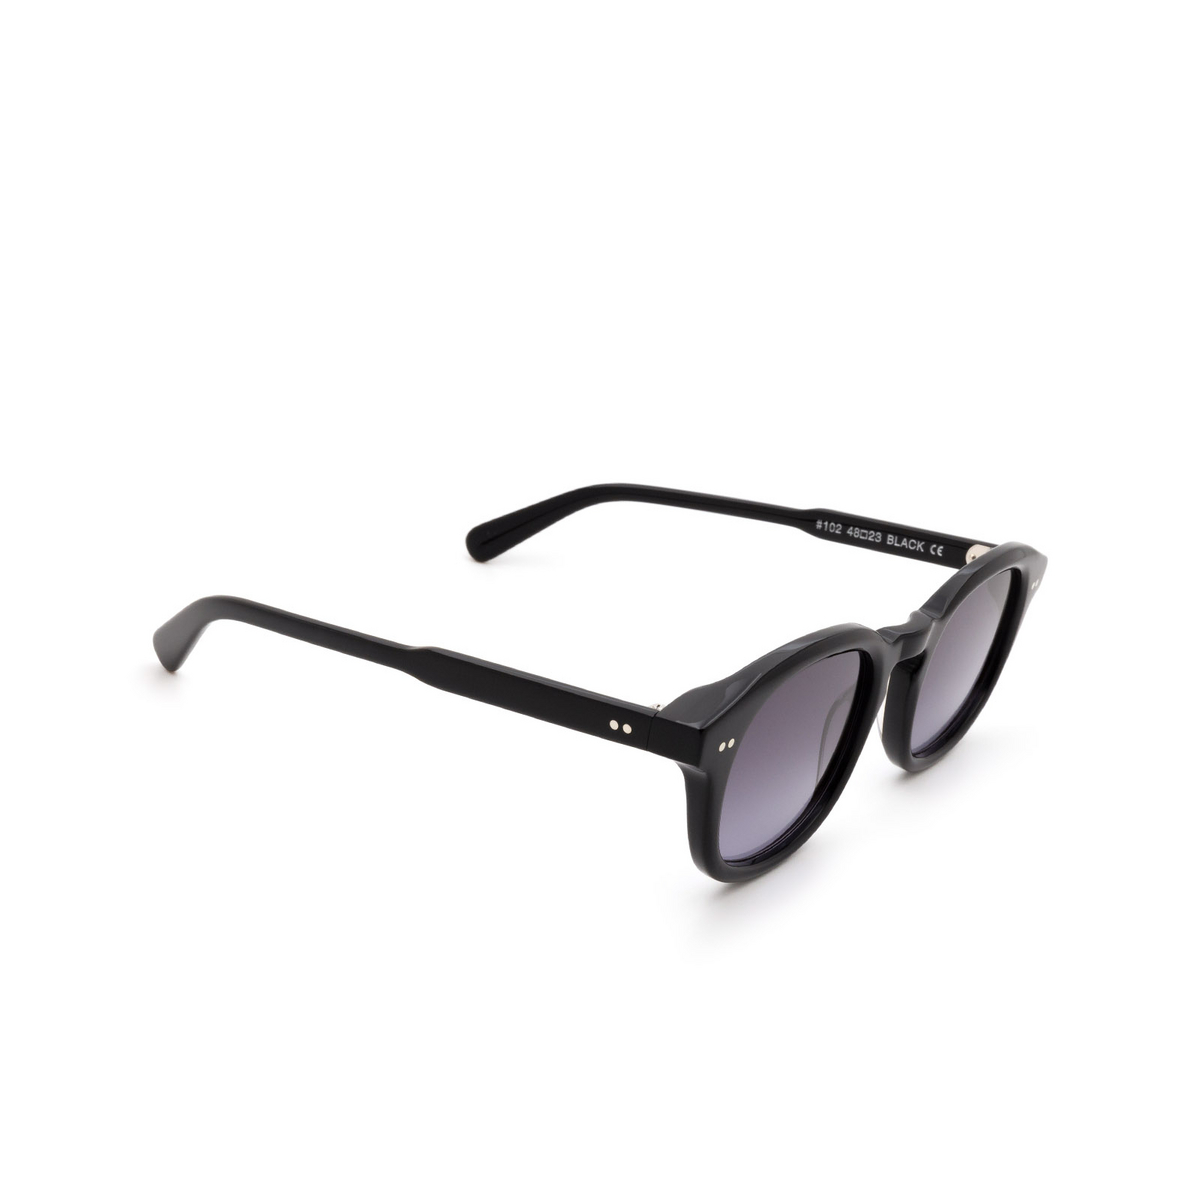 Chimi® Square Sunglasses: #102 color Black - three-quarters view.